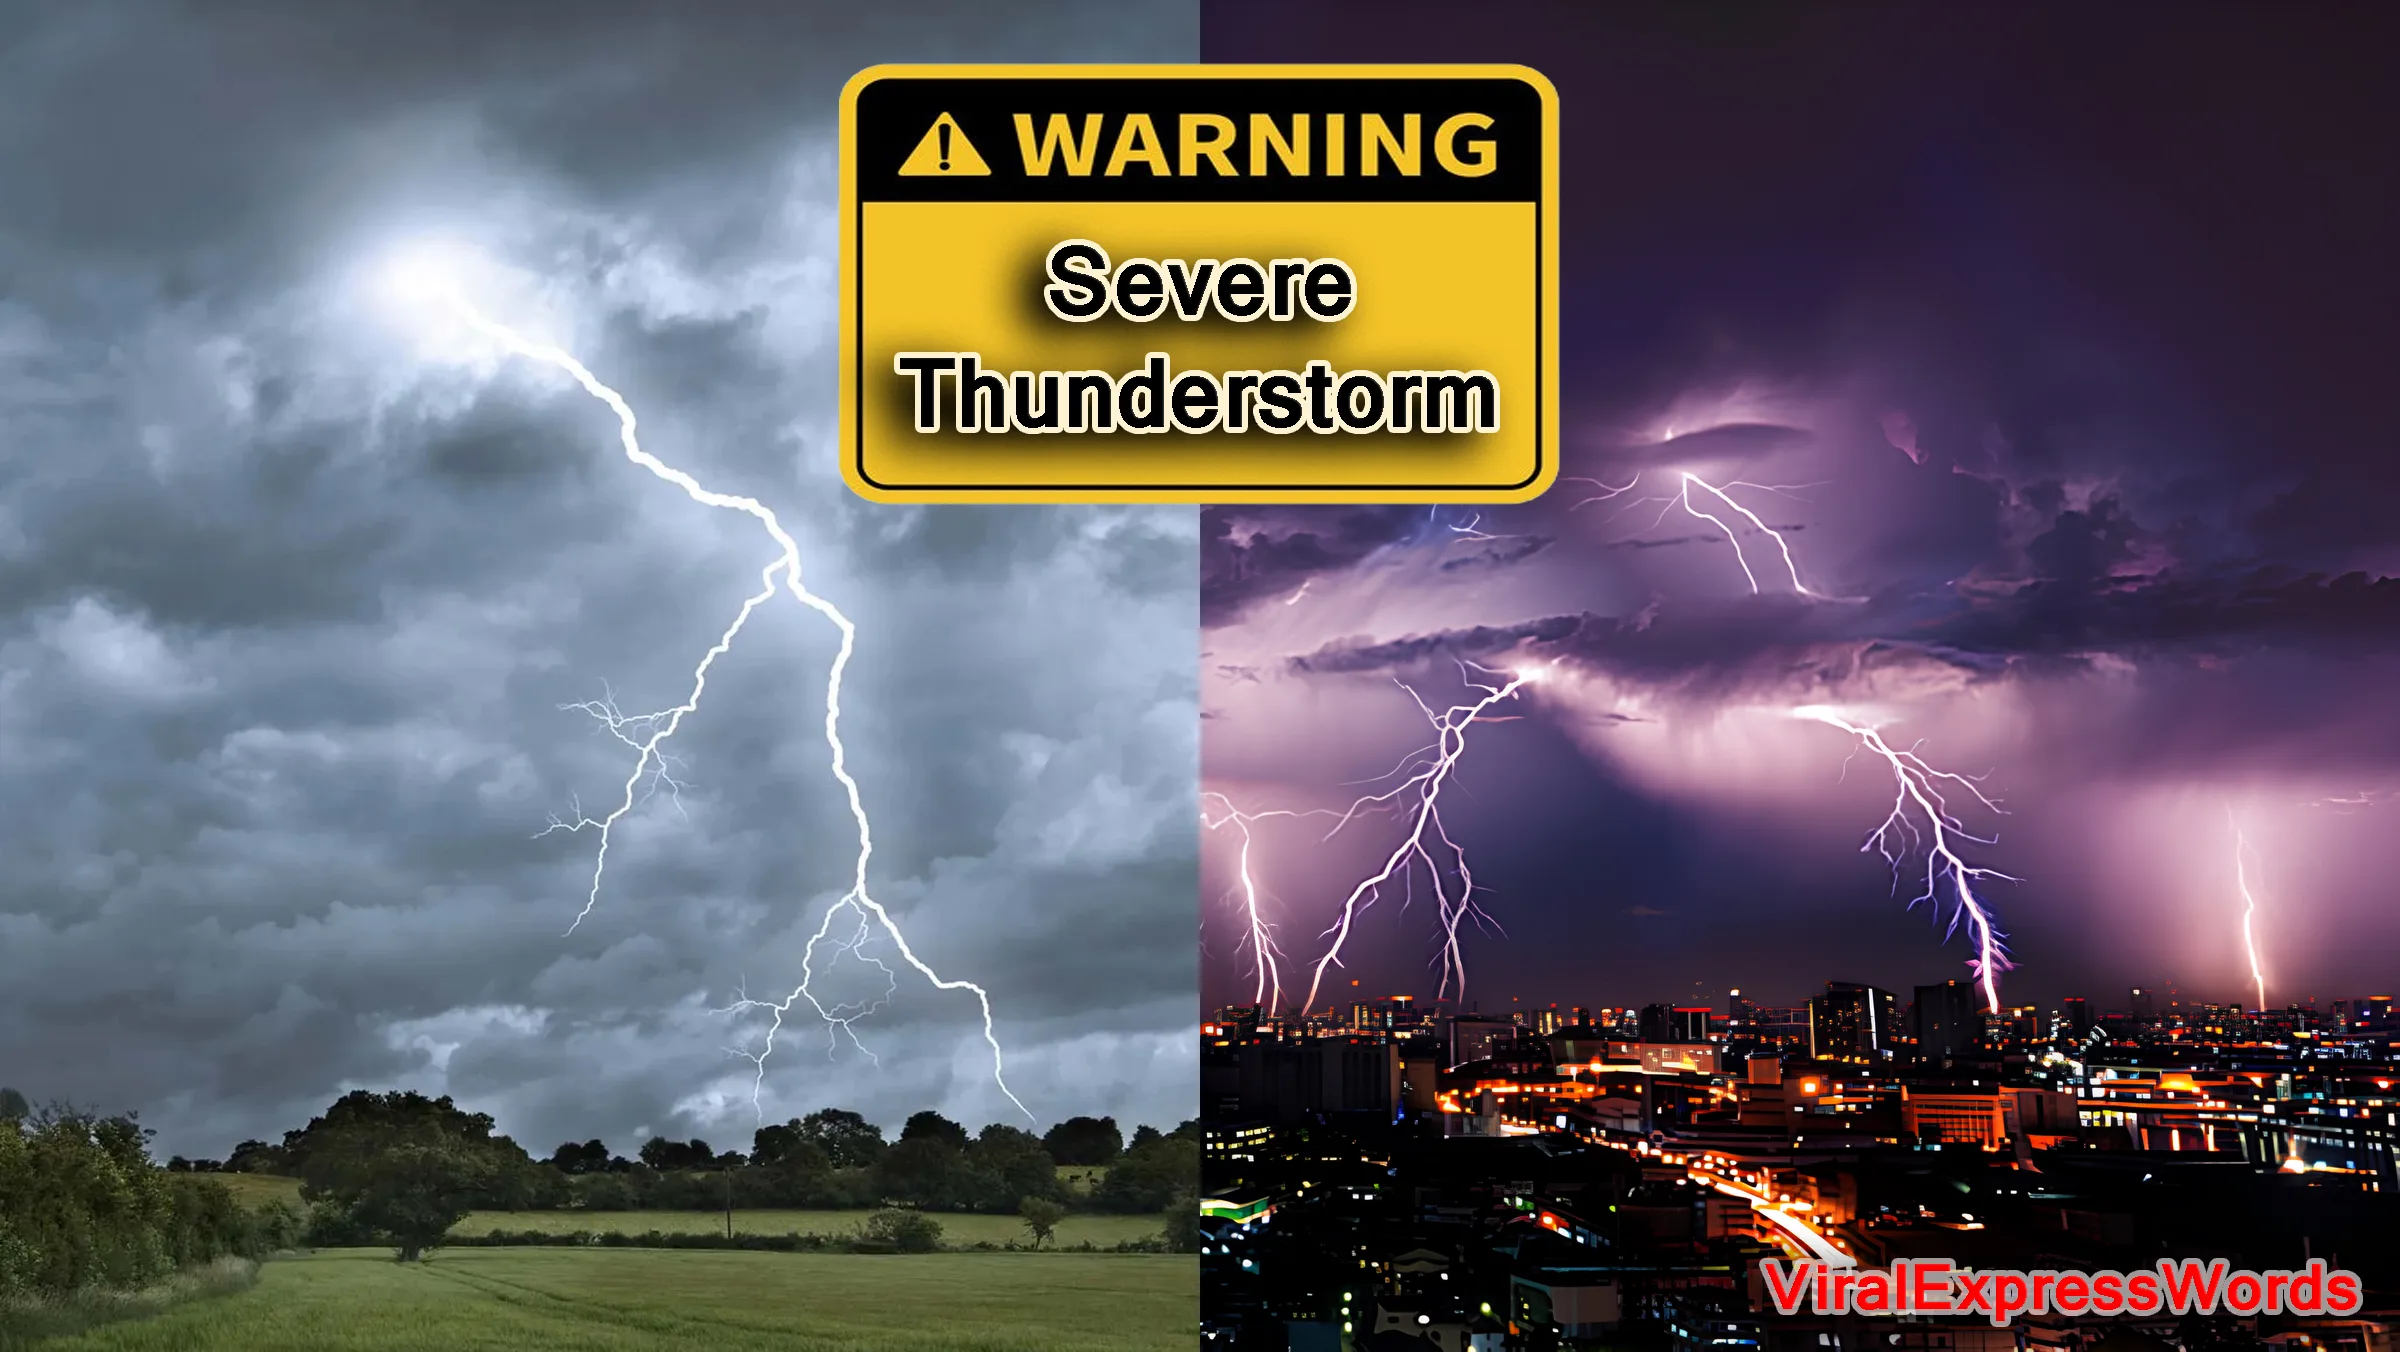 Severe thunderstorm warning sign